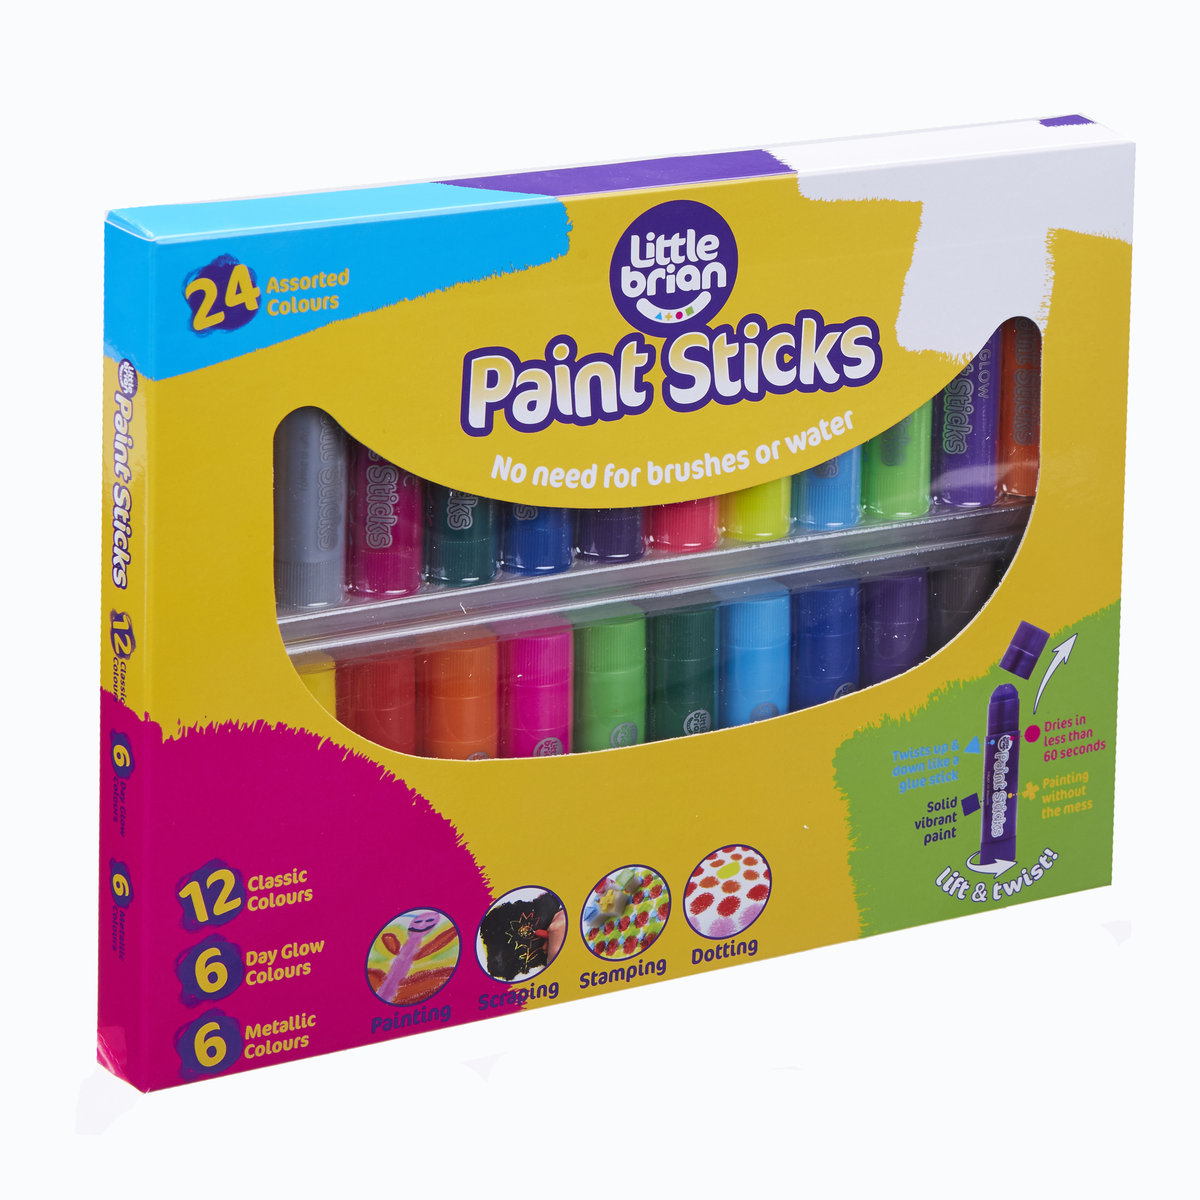 paint that sticks to plastic